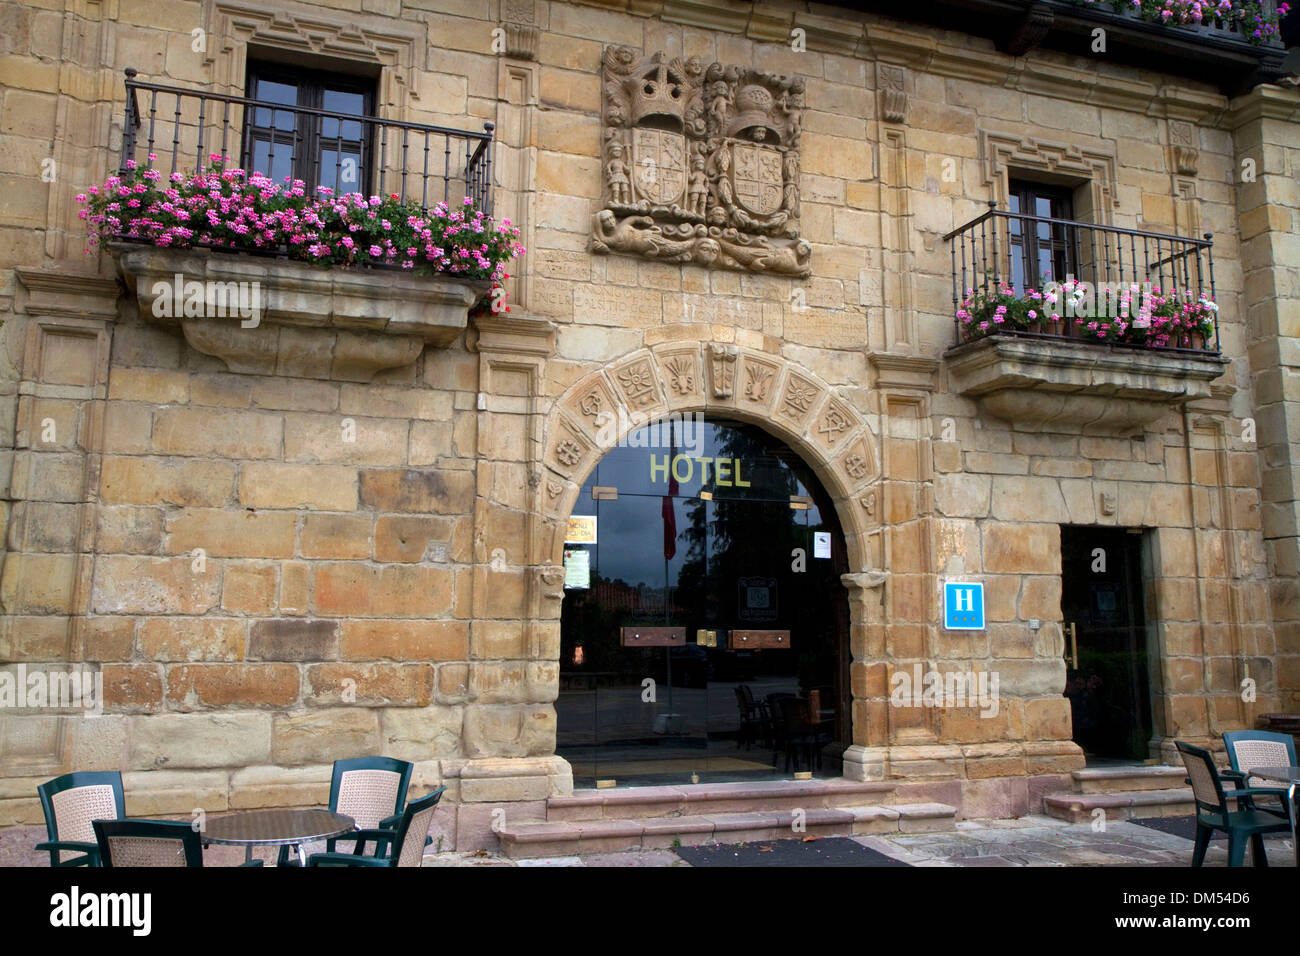 El exterior del hotel en Santillana del Mar, Cantabria, España. Foto de stock